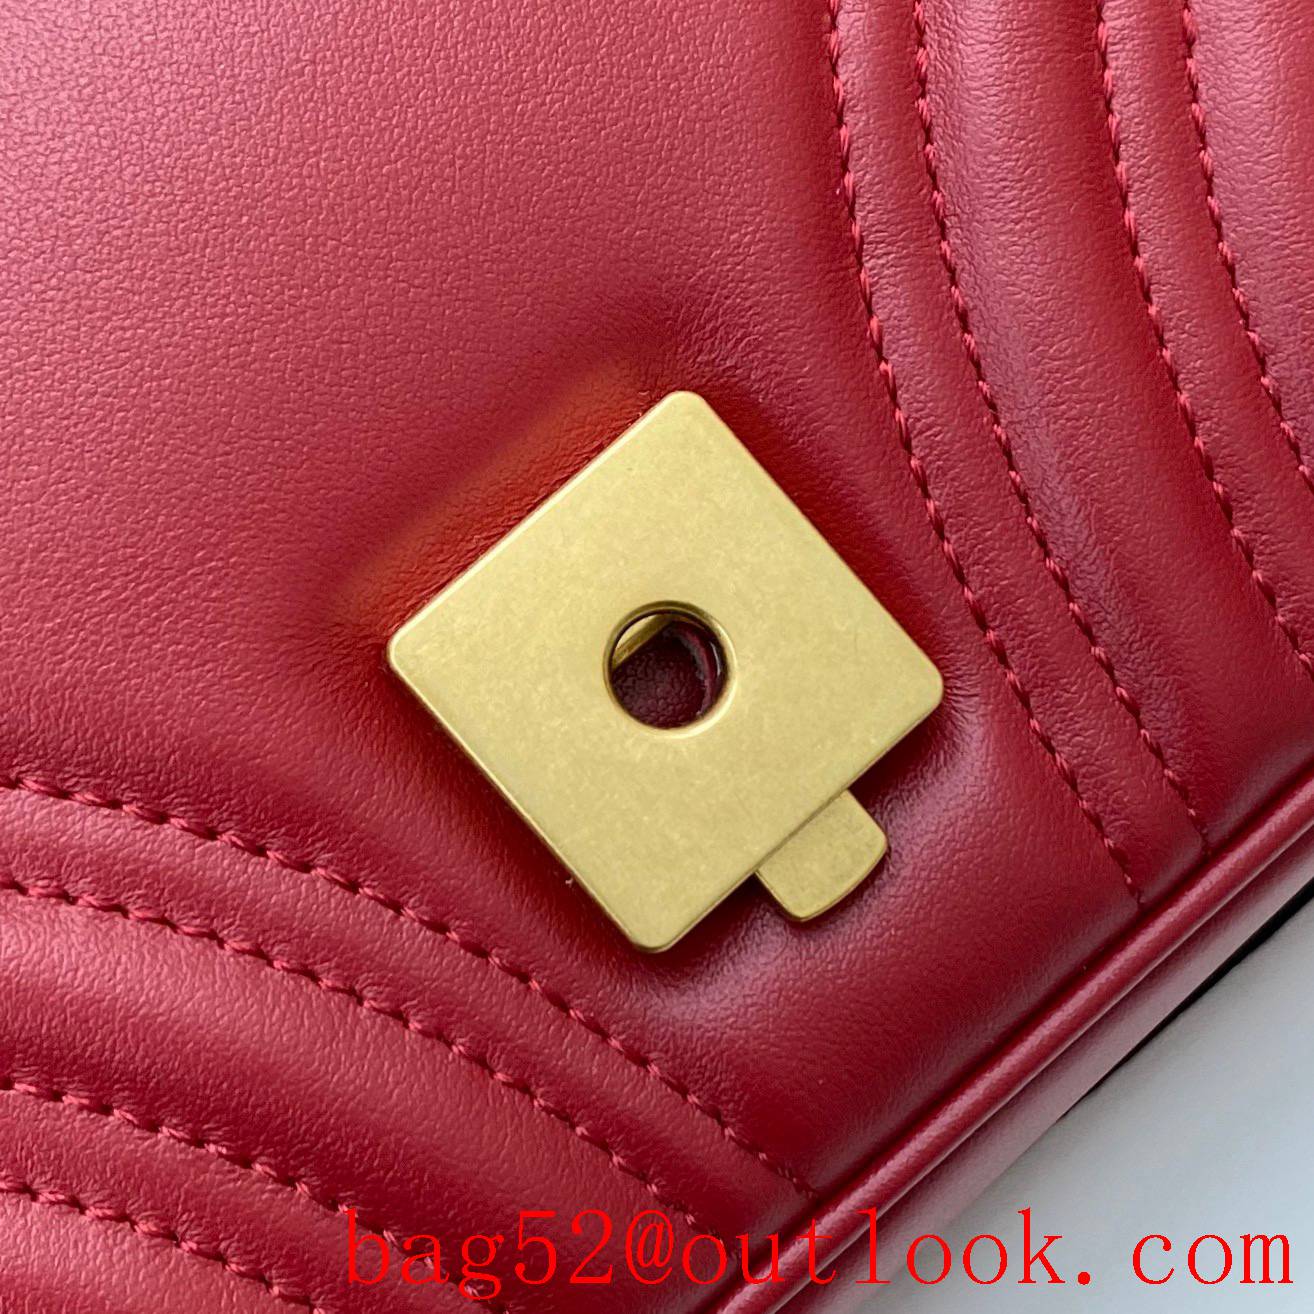 Gucci Now marmont original leather medium red gold chain women's crossbody handbag